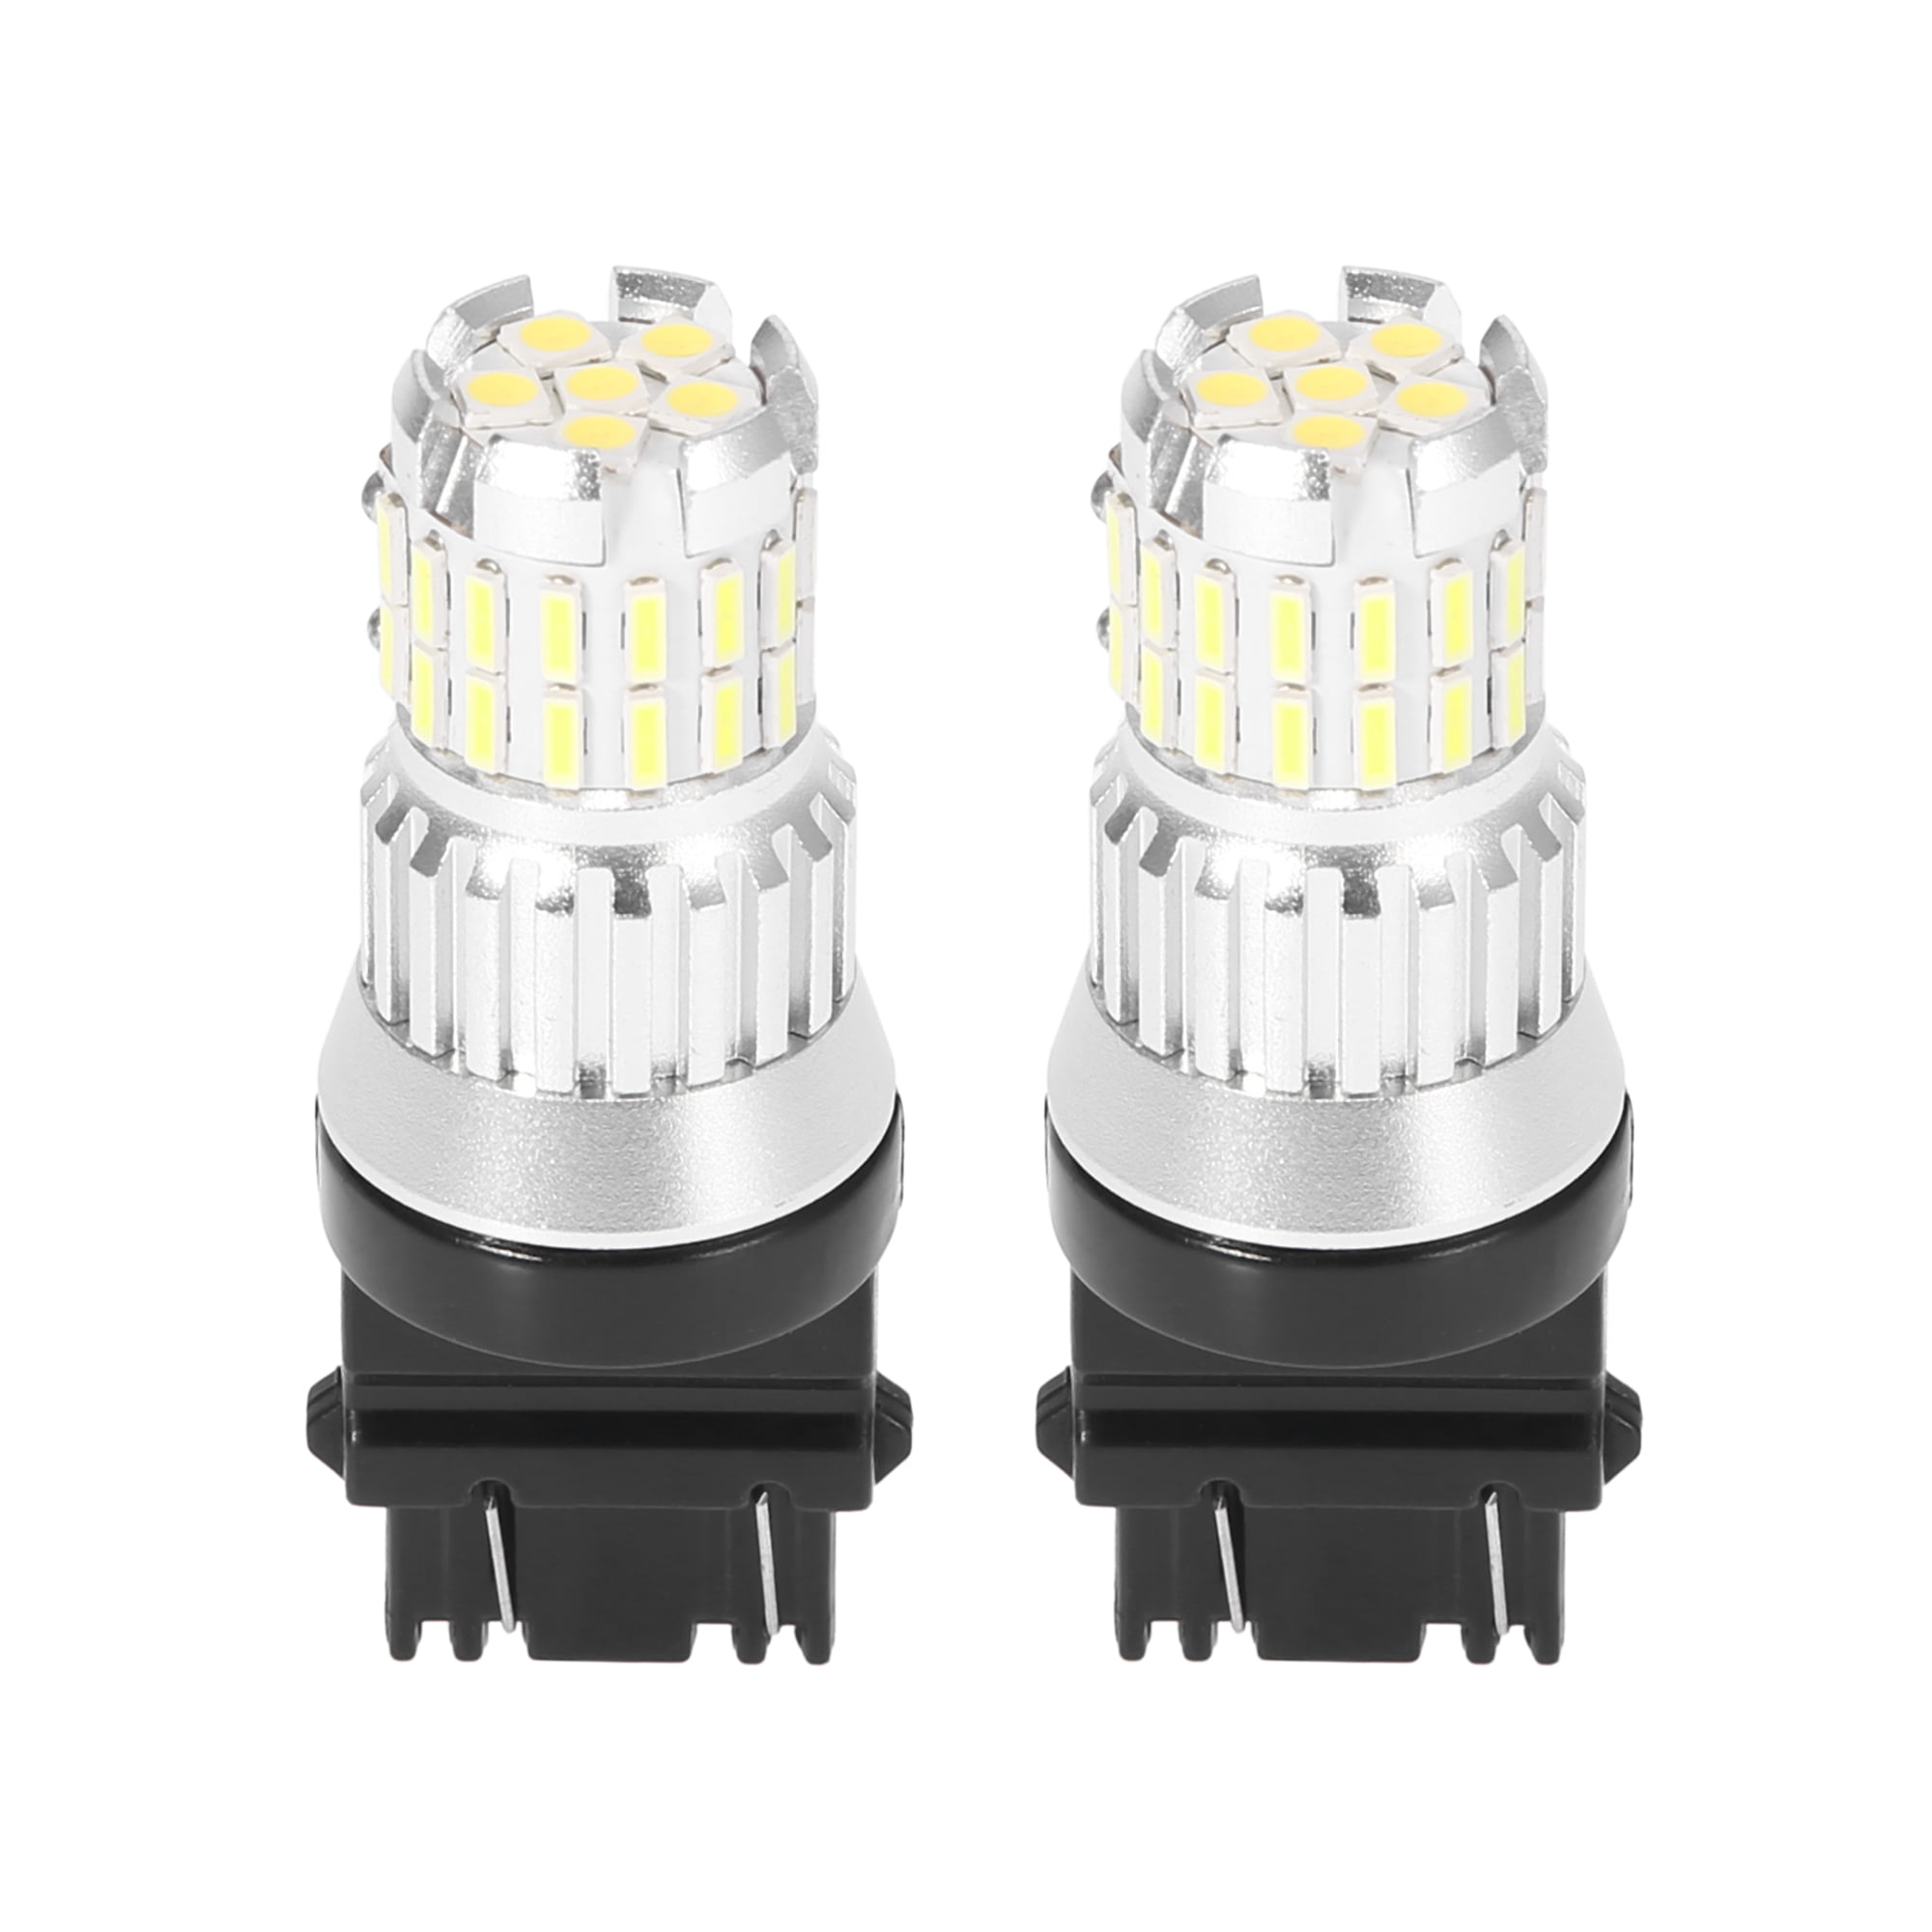 X AUTOHAUX 2 Pcs T25 3157 White LED Light Bulbs Replacement Universal for Turn Signal Light